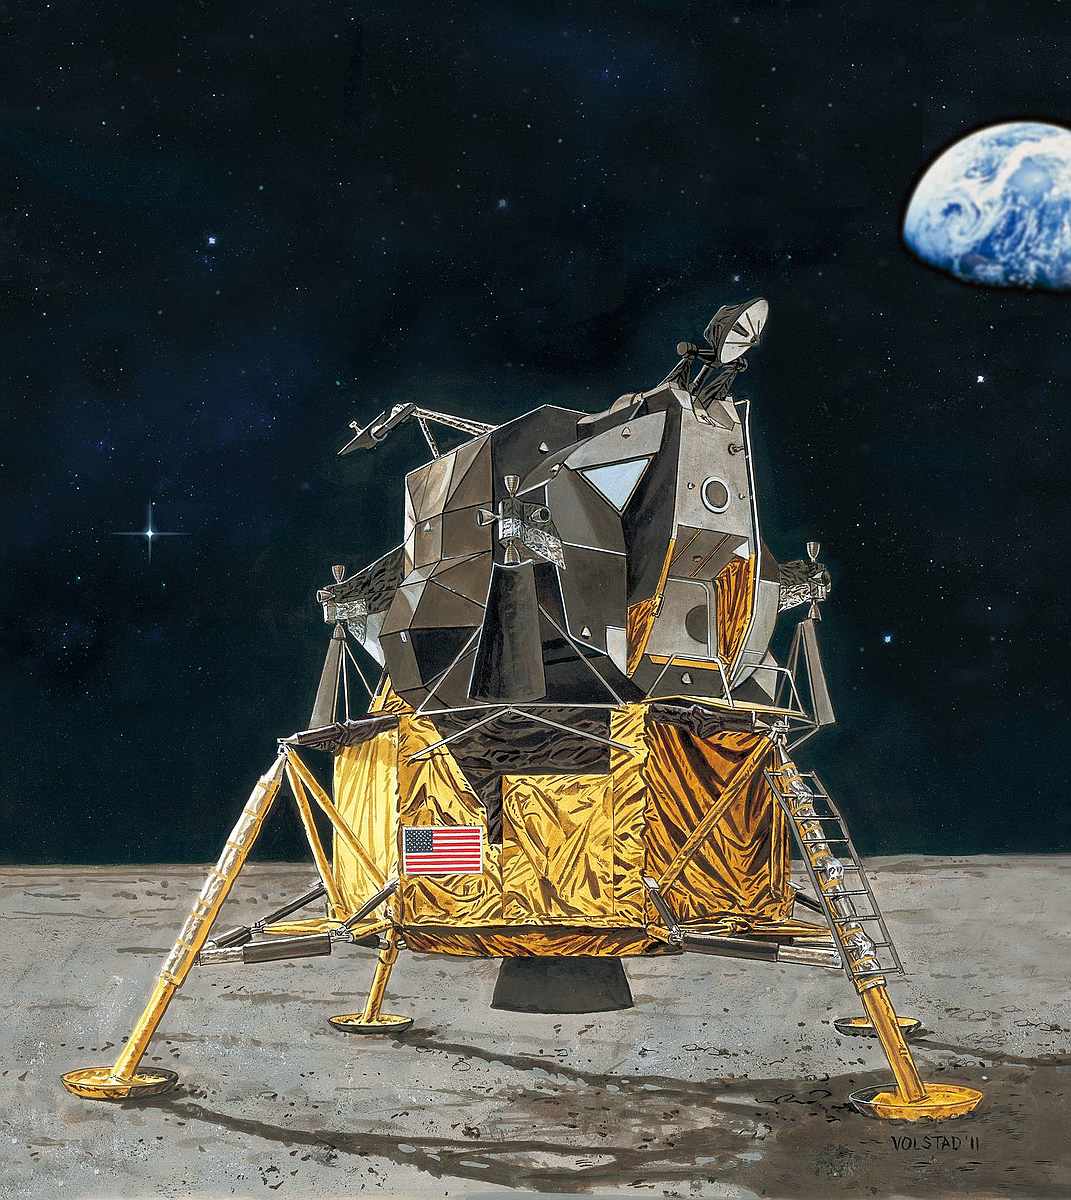 Revell-03701-Apollo-11-Lunar-Module-Eagle-50th-Anniversary-Moon-Landing Revell-Neuheiten im I. Quartal 2019